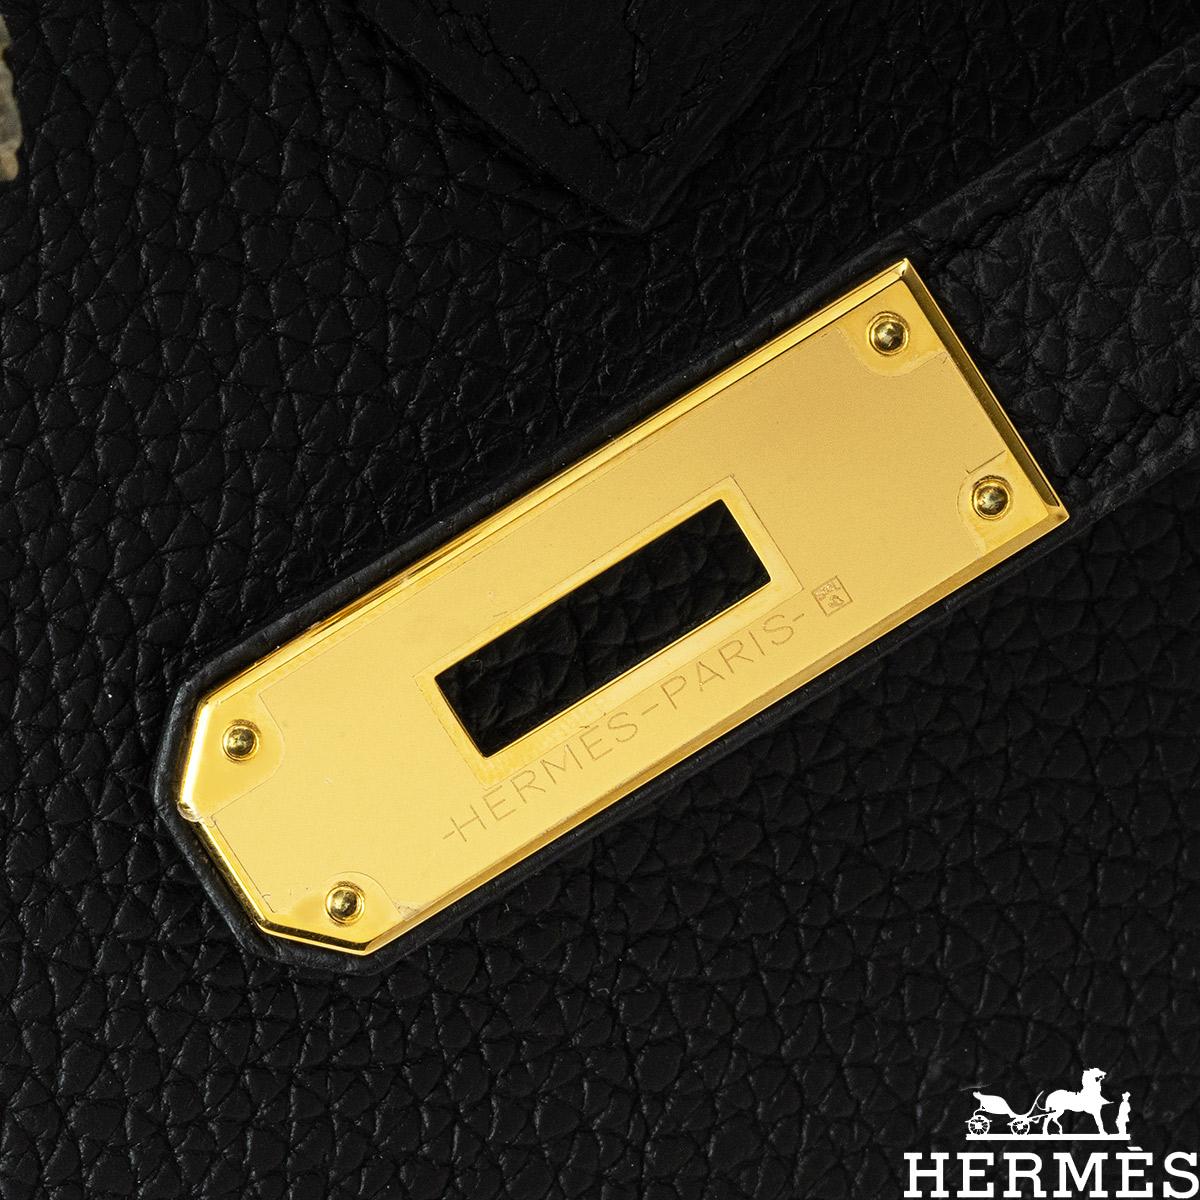 Hermès Birkin 30cm Noir Piel De Becerro Togo GHW 3